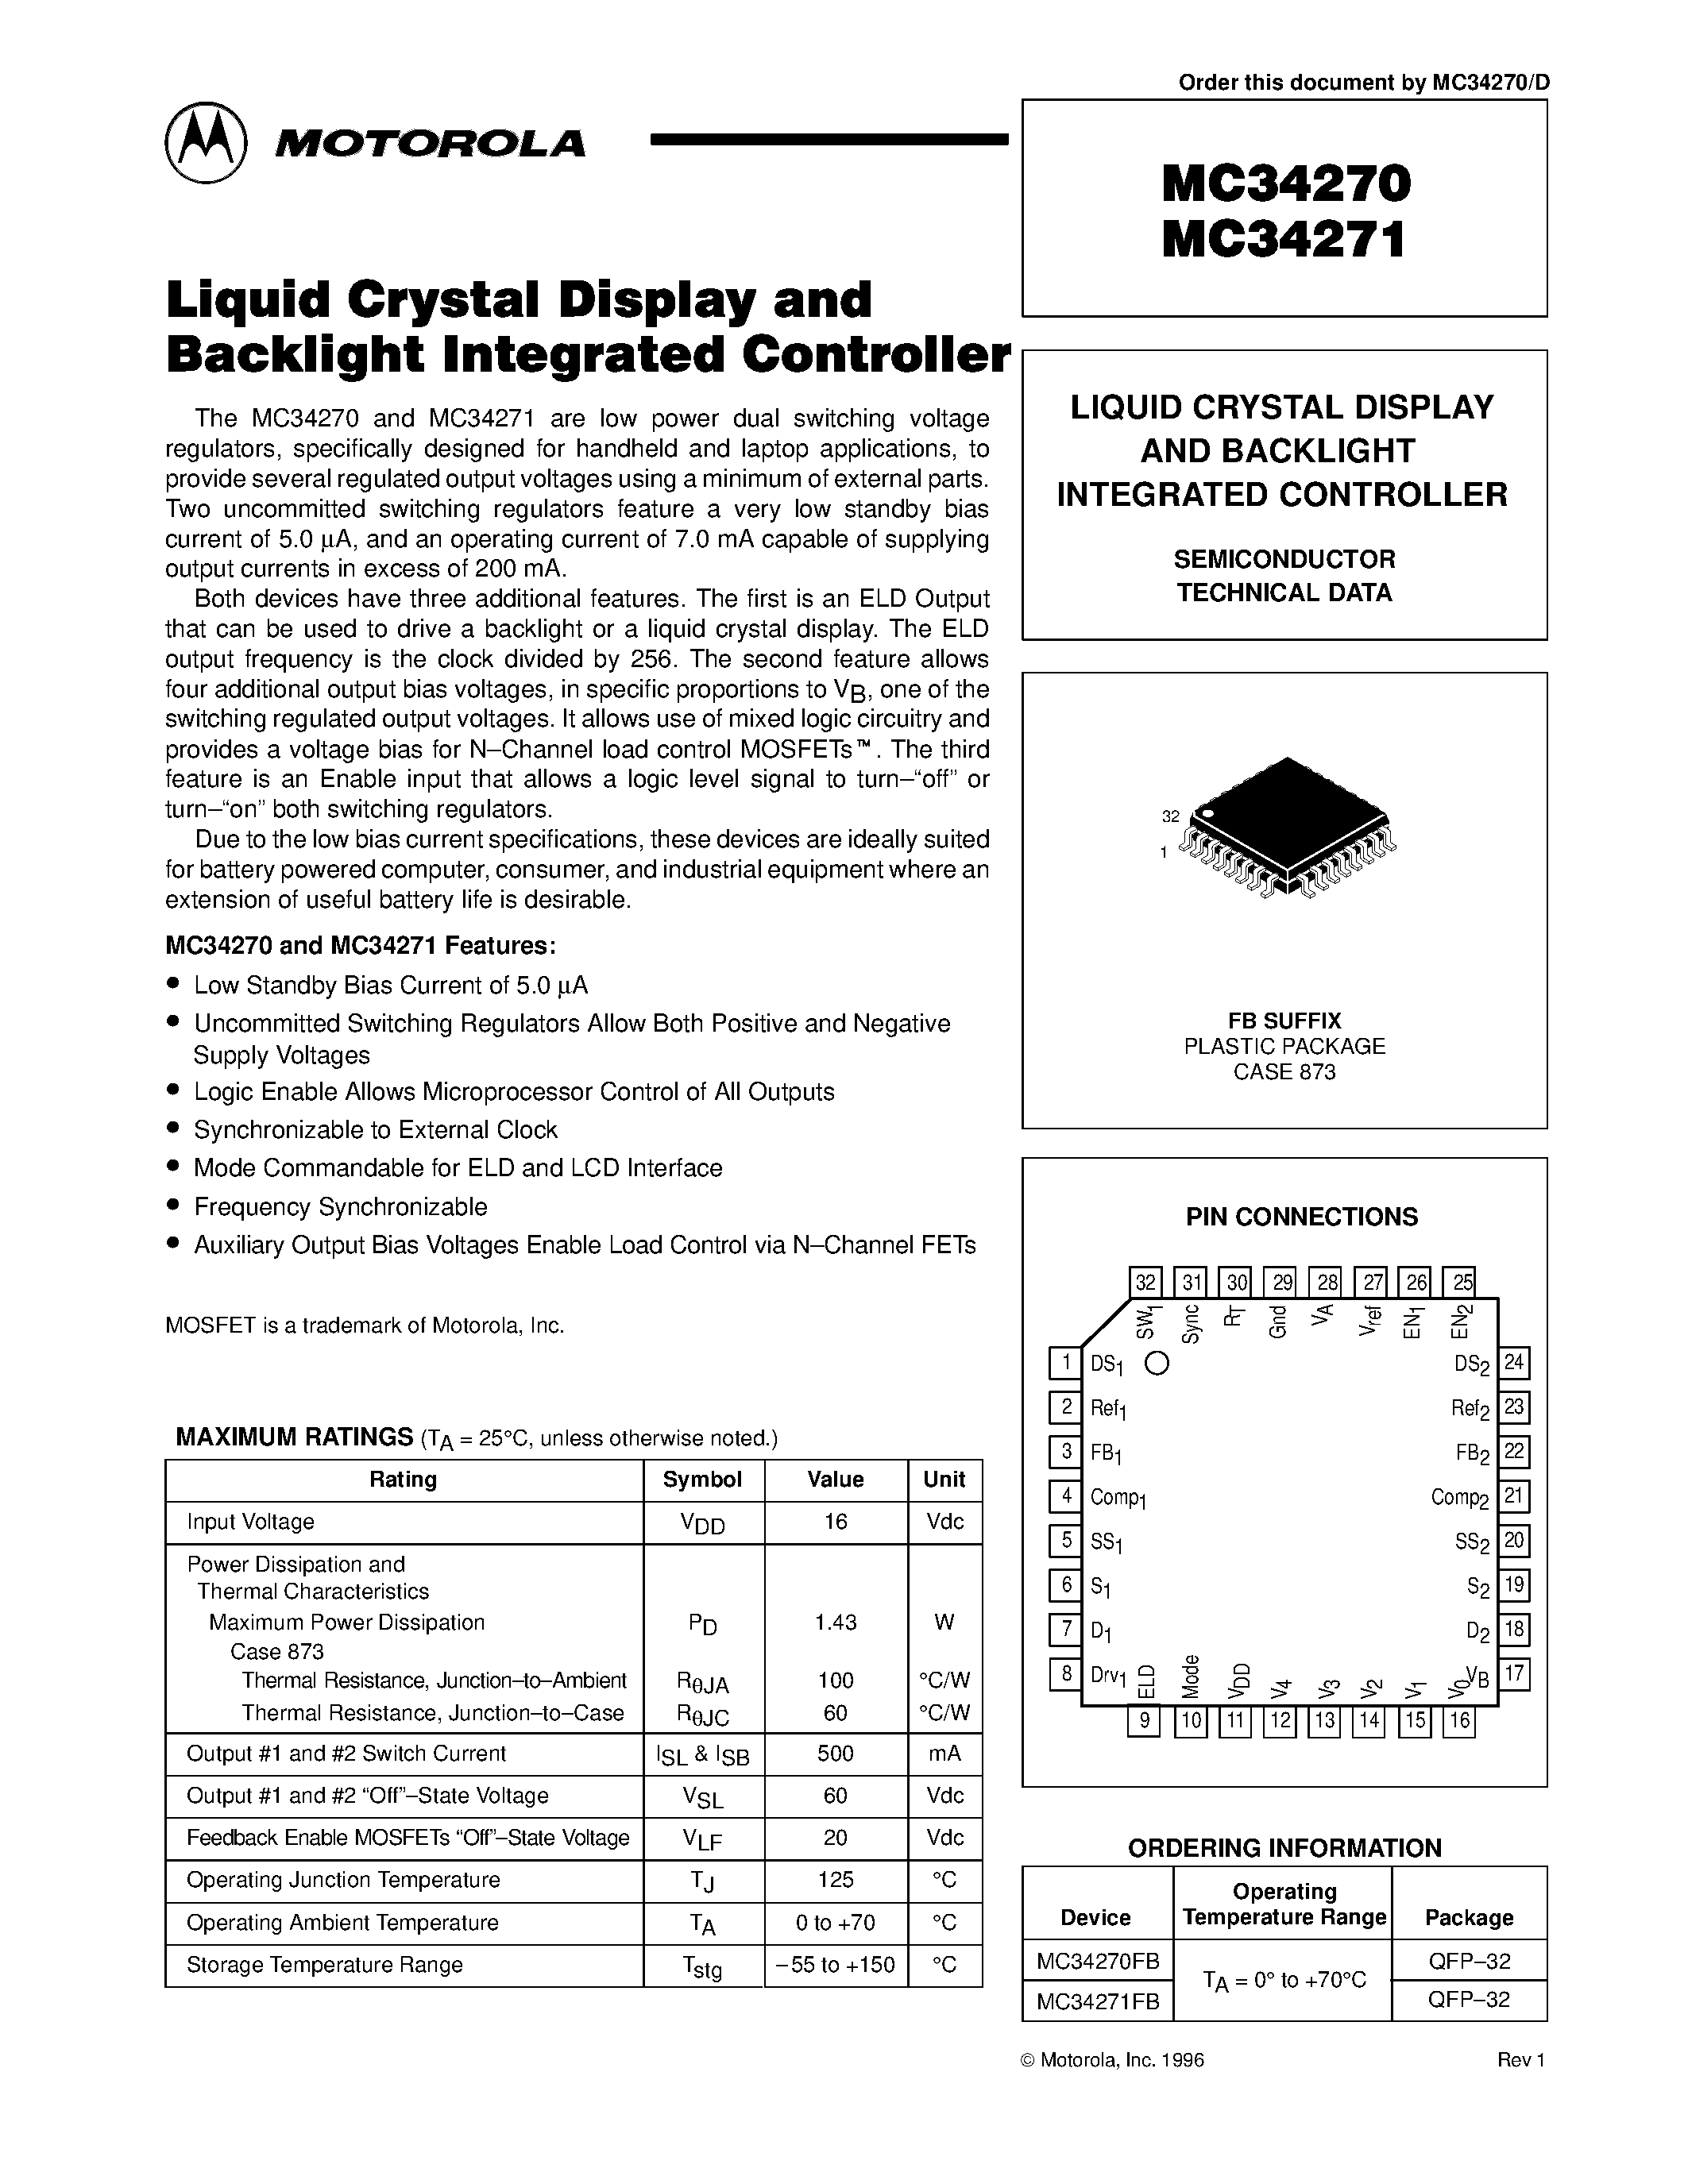 Datasheet MC34270 - (MC34270 / MC34271) LIQUID CRYSTAL DISPLAY AND BACKLIGHT INTEGRATED CONTROLLER page 1